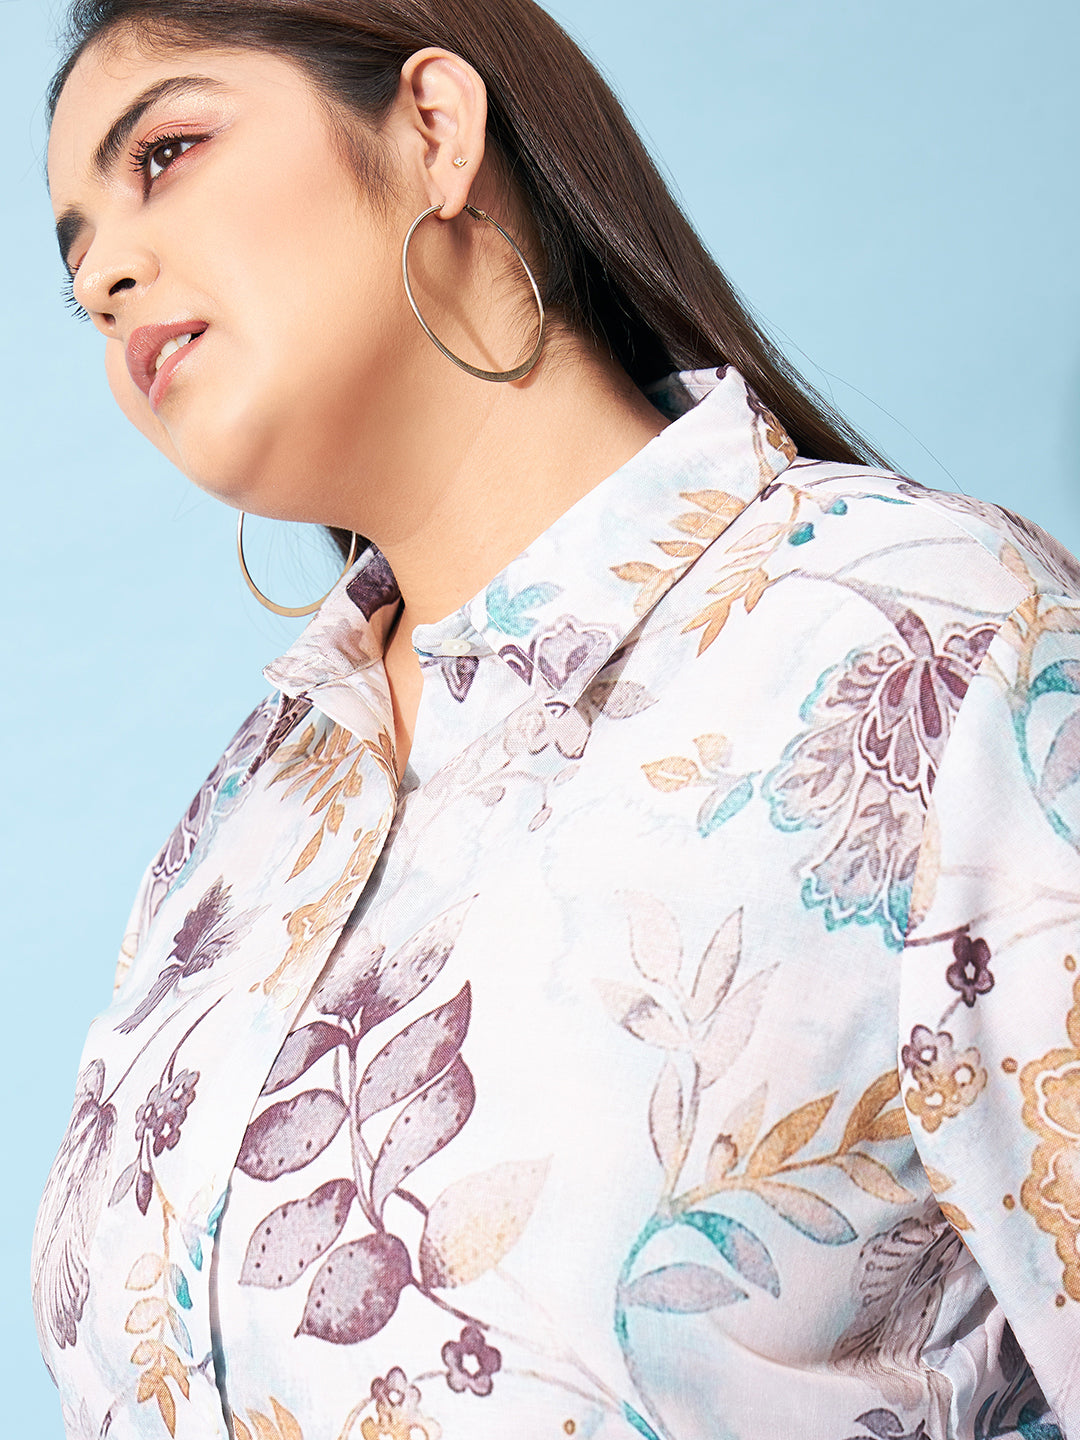 Athena Ample Plus Size Floral Print Linen Shirt Dress - Athena Lifestyle